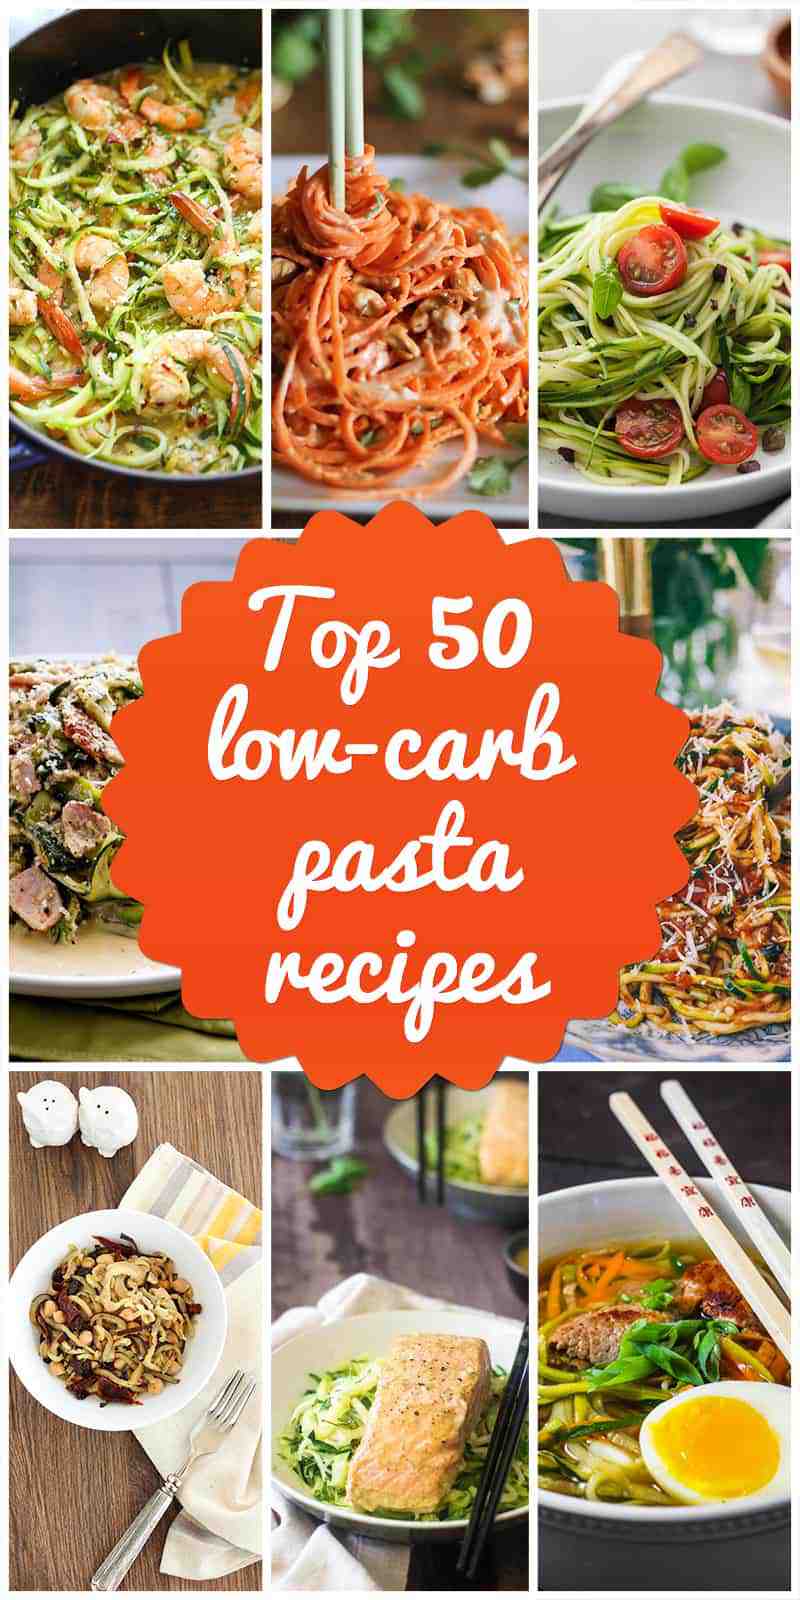 50 best low-carb pasta recipes